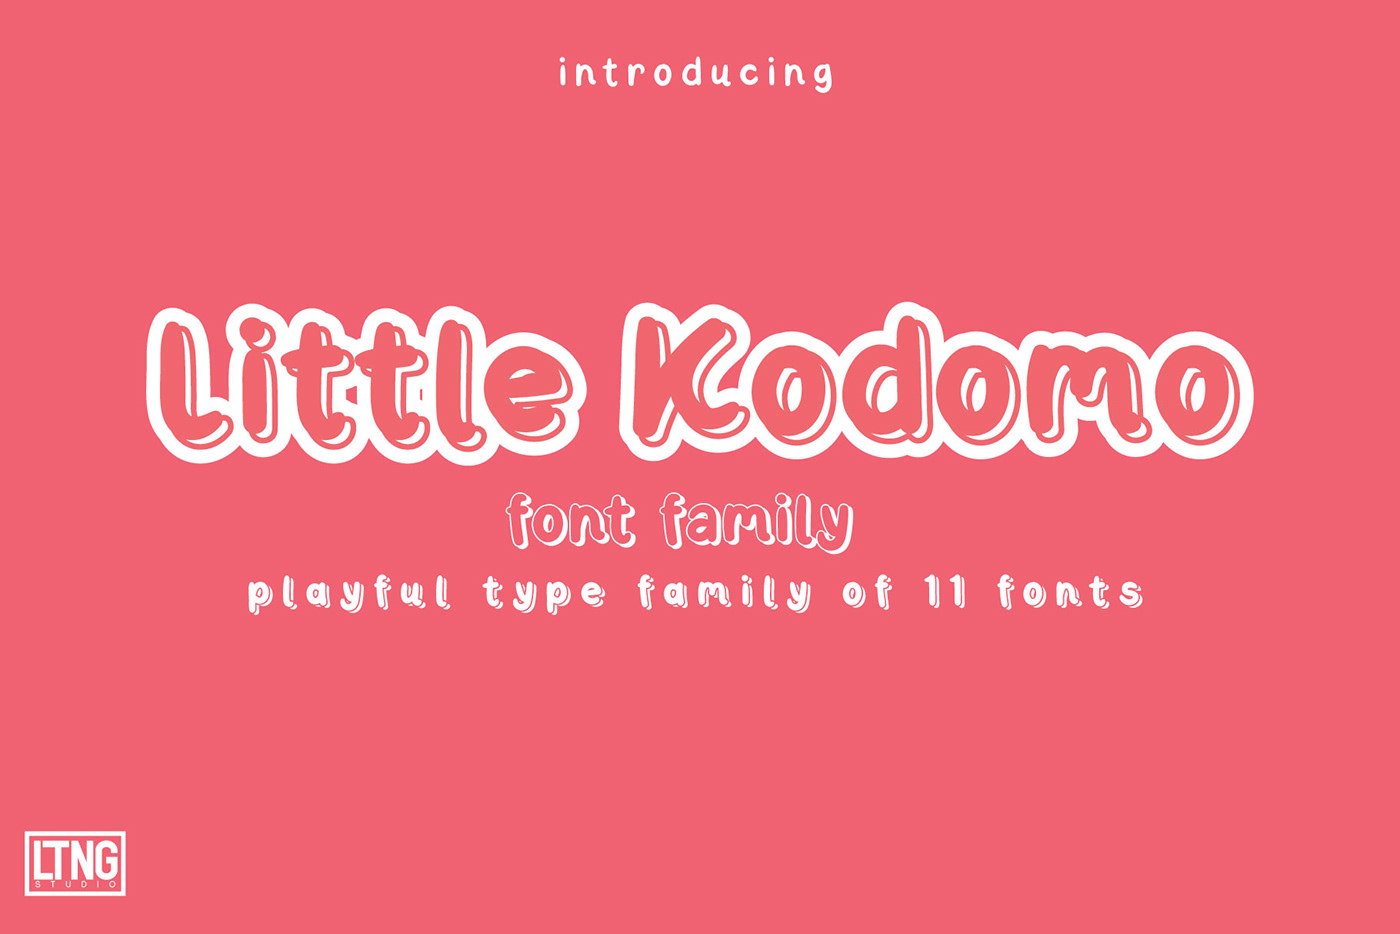 children font cute lettering Fun kids children's book cartoon little kodomo